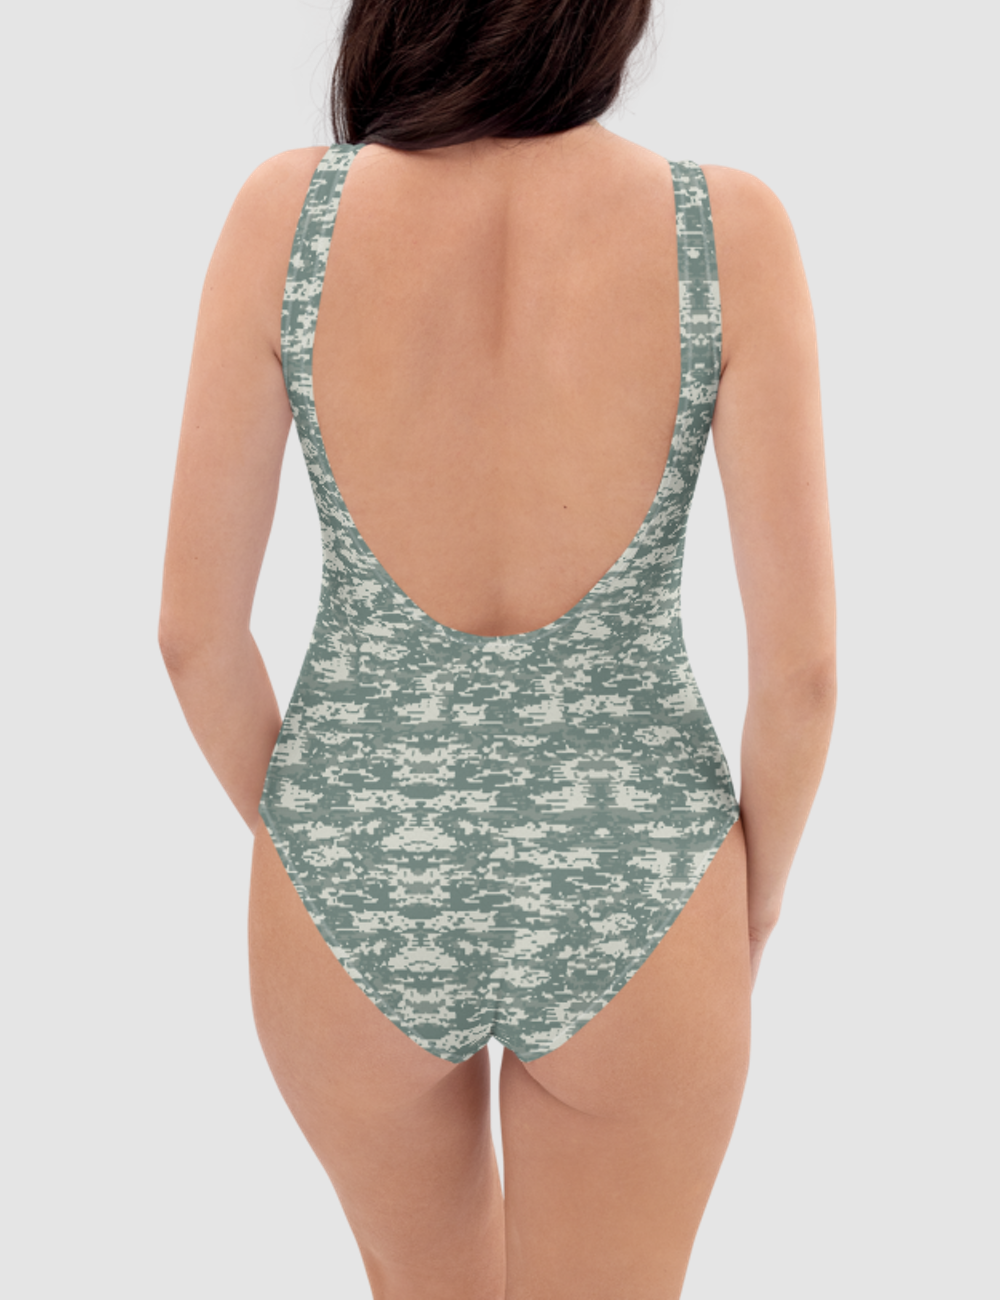 Digital Military Camouflage Print | Women's One-Piece Swimsuit OniTakai